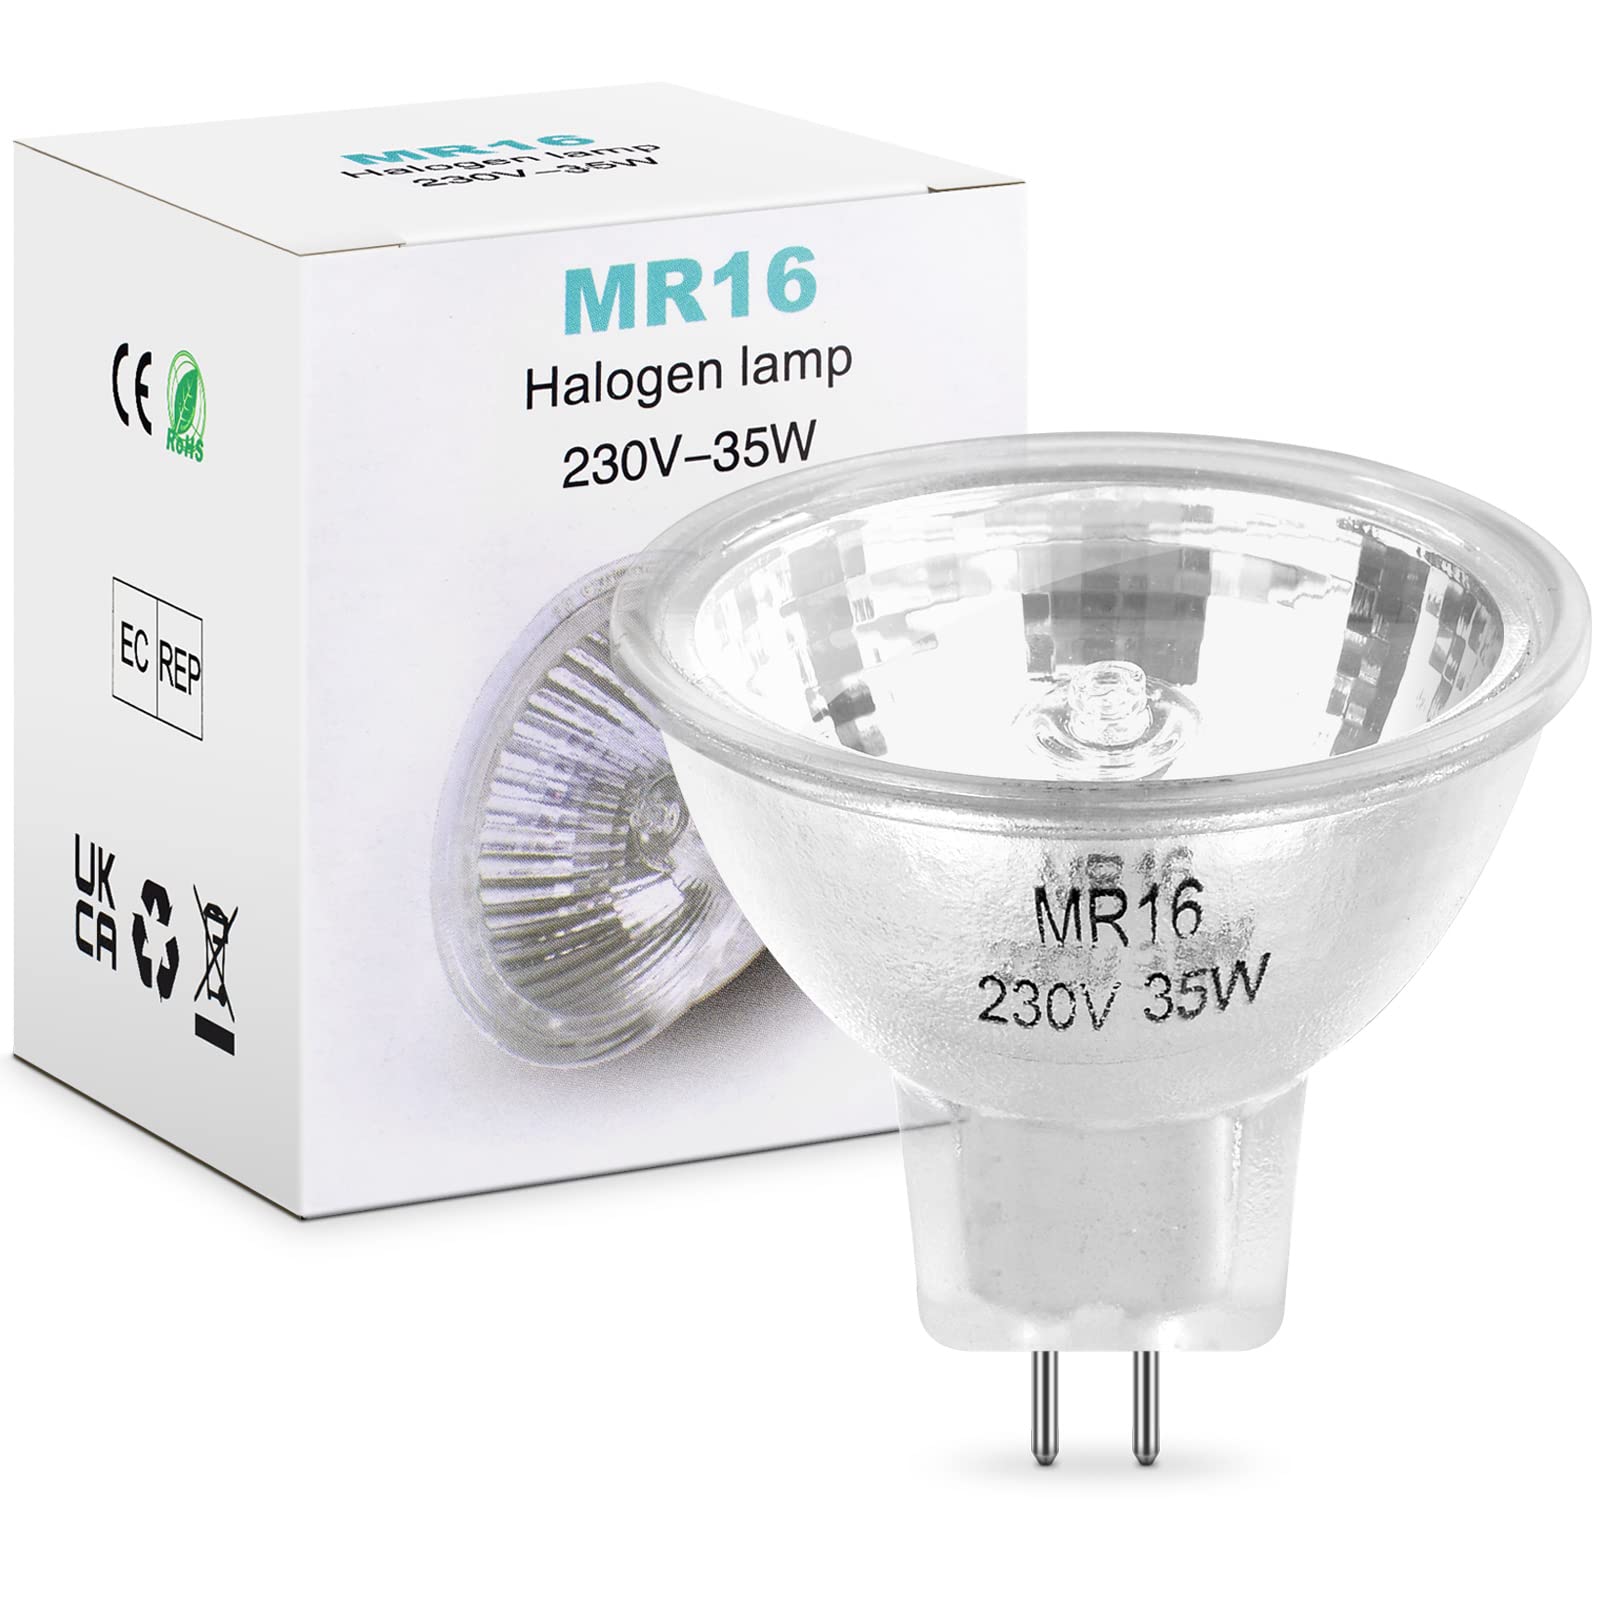 [8 Pack] MR16 Halogen Bulb, BROTOU Dimmable 35W 230V 400LM GU5.3 Spotlight Bulb, 2700K Warm White, 2 Pin Base Bulb for Ceiling Light, Wall Light, No Need of Transformer [Energy Class C]